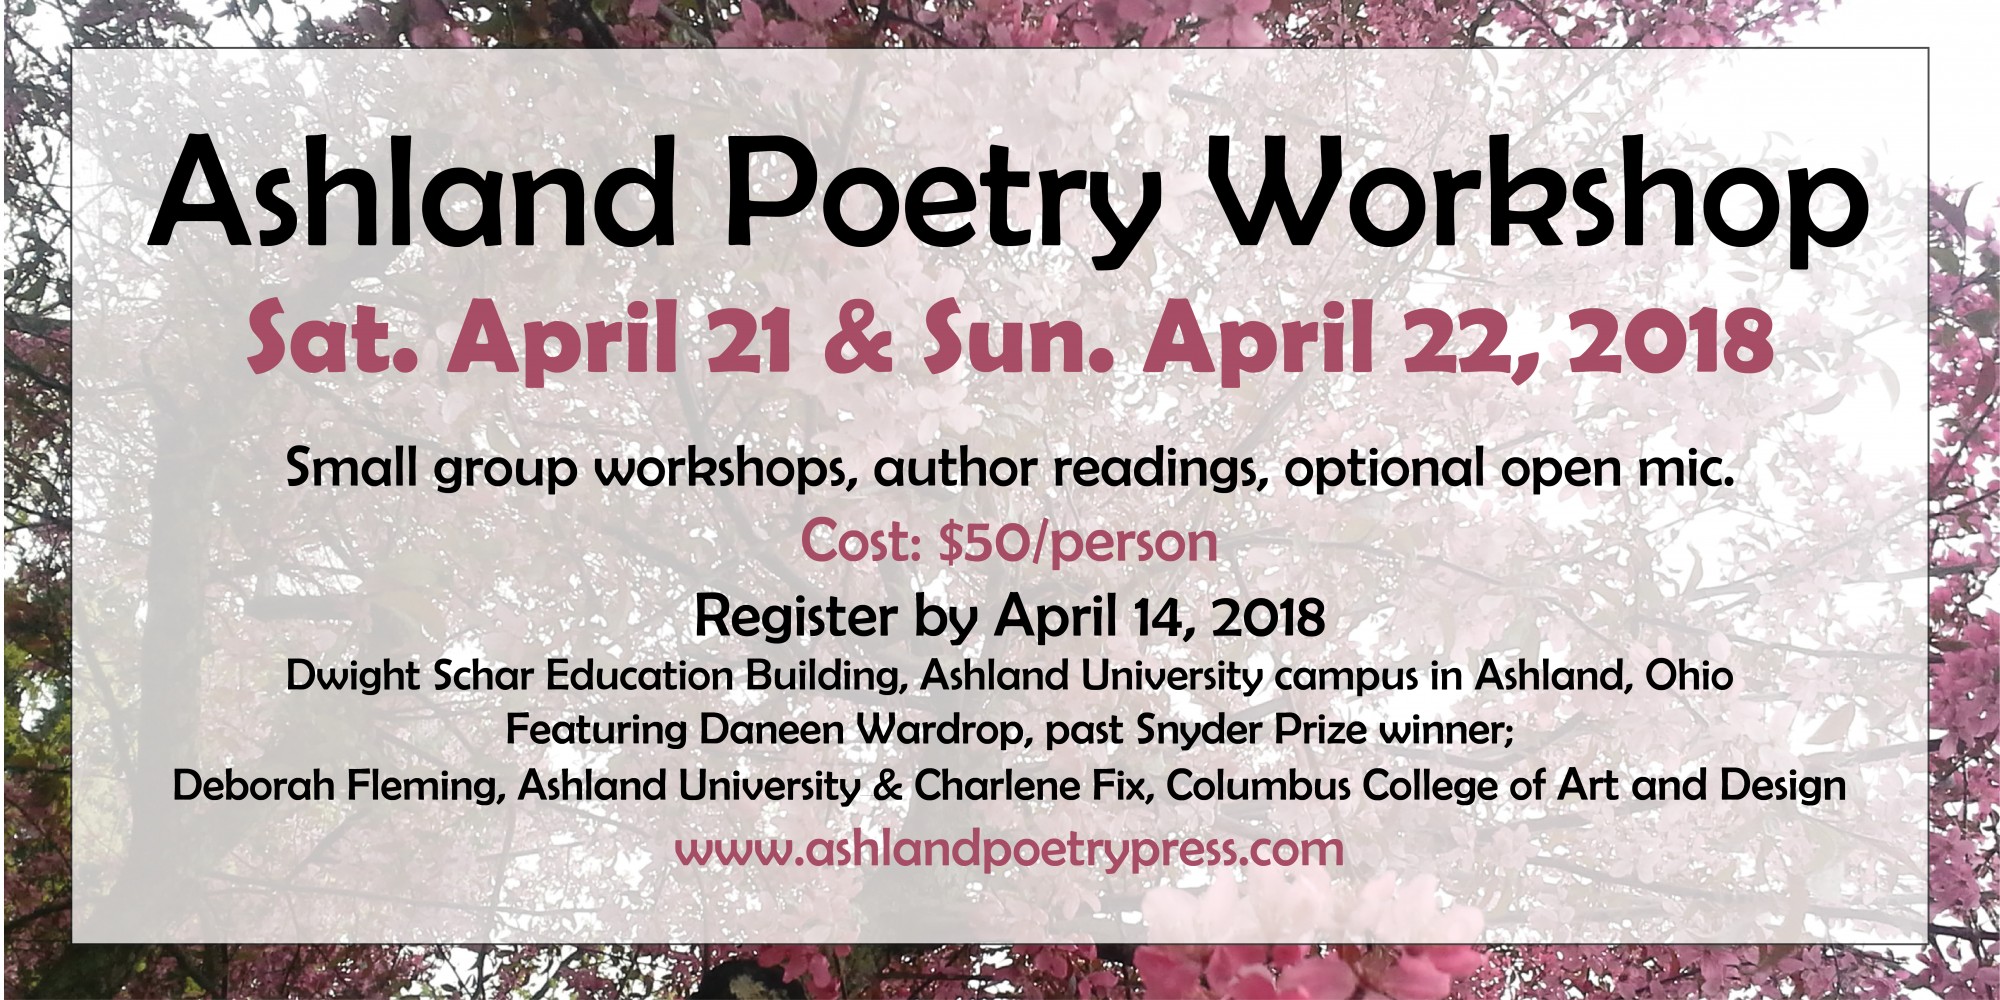 Spring Poetry Workshop Set for April 21 and 22